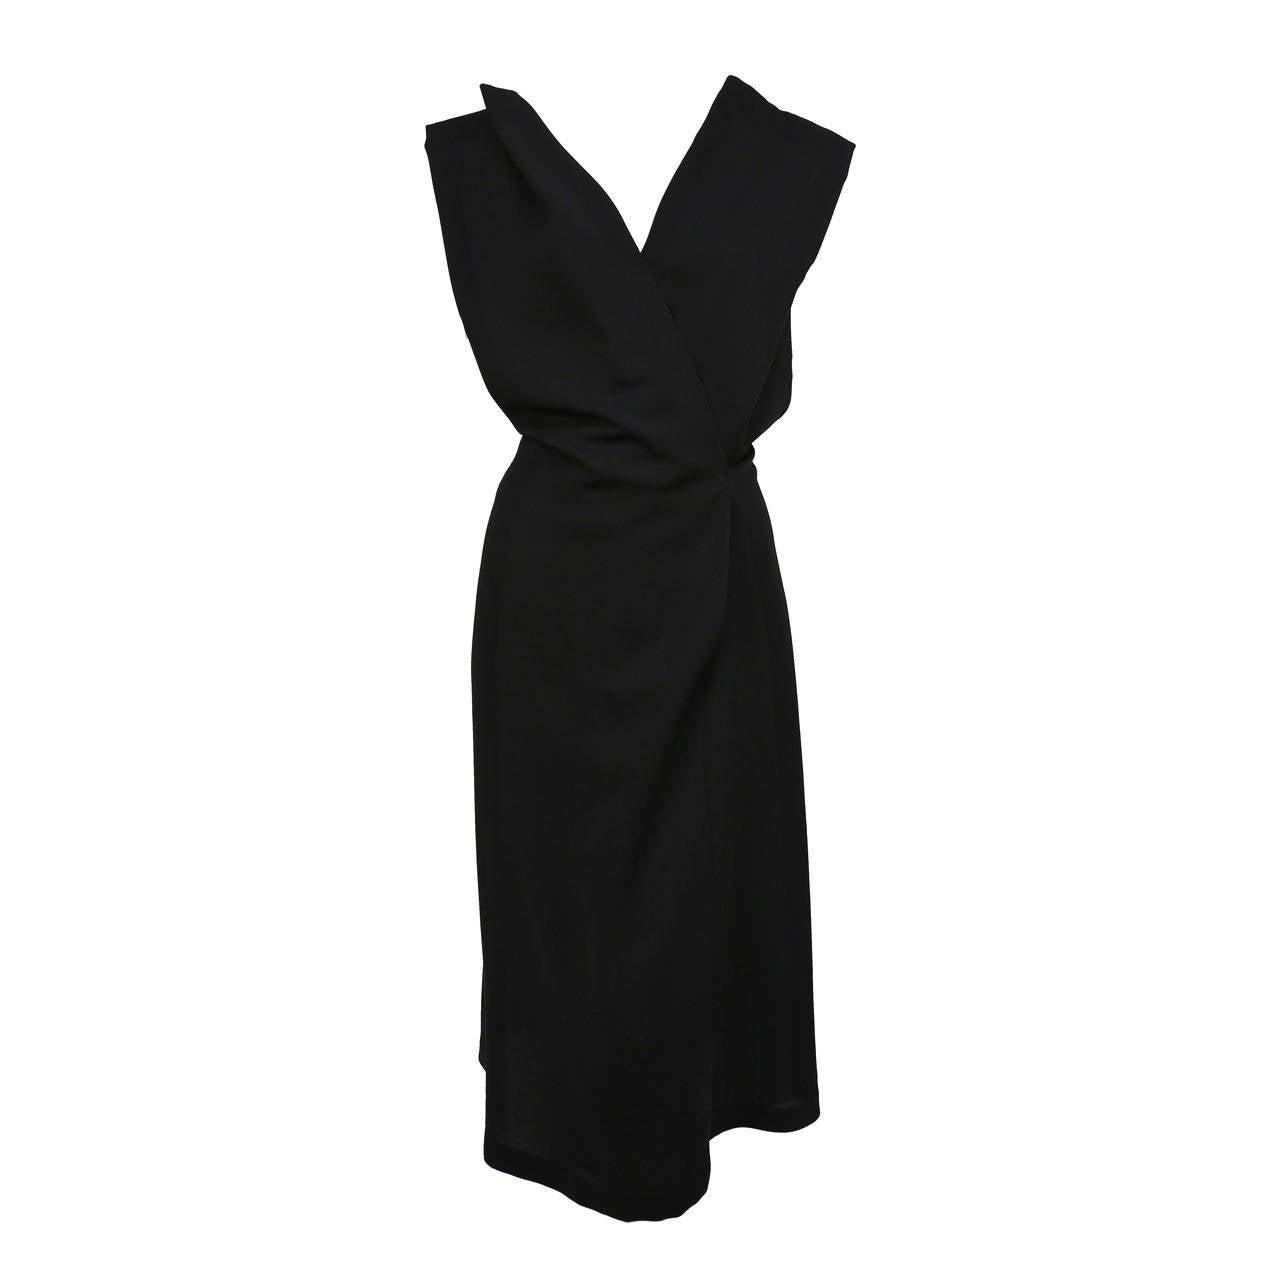 1980's YOHJI YAMAMOTO black dress with asymmetrical closure and origami pleats